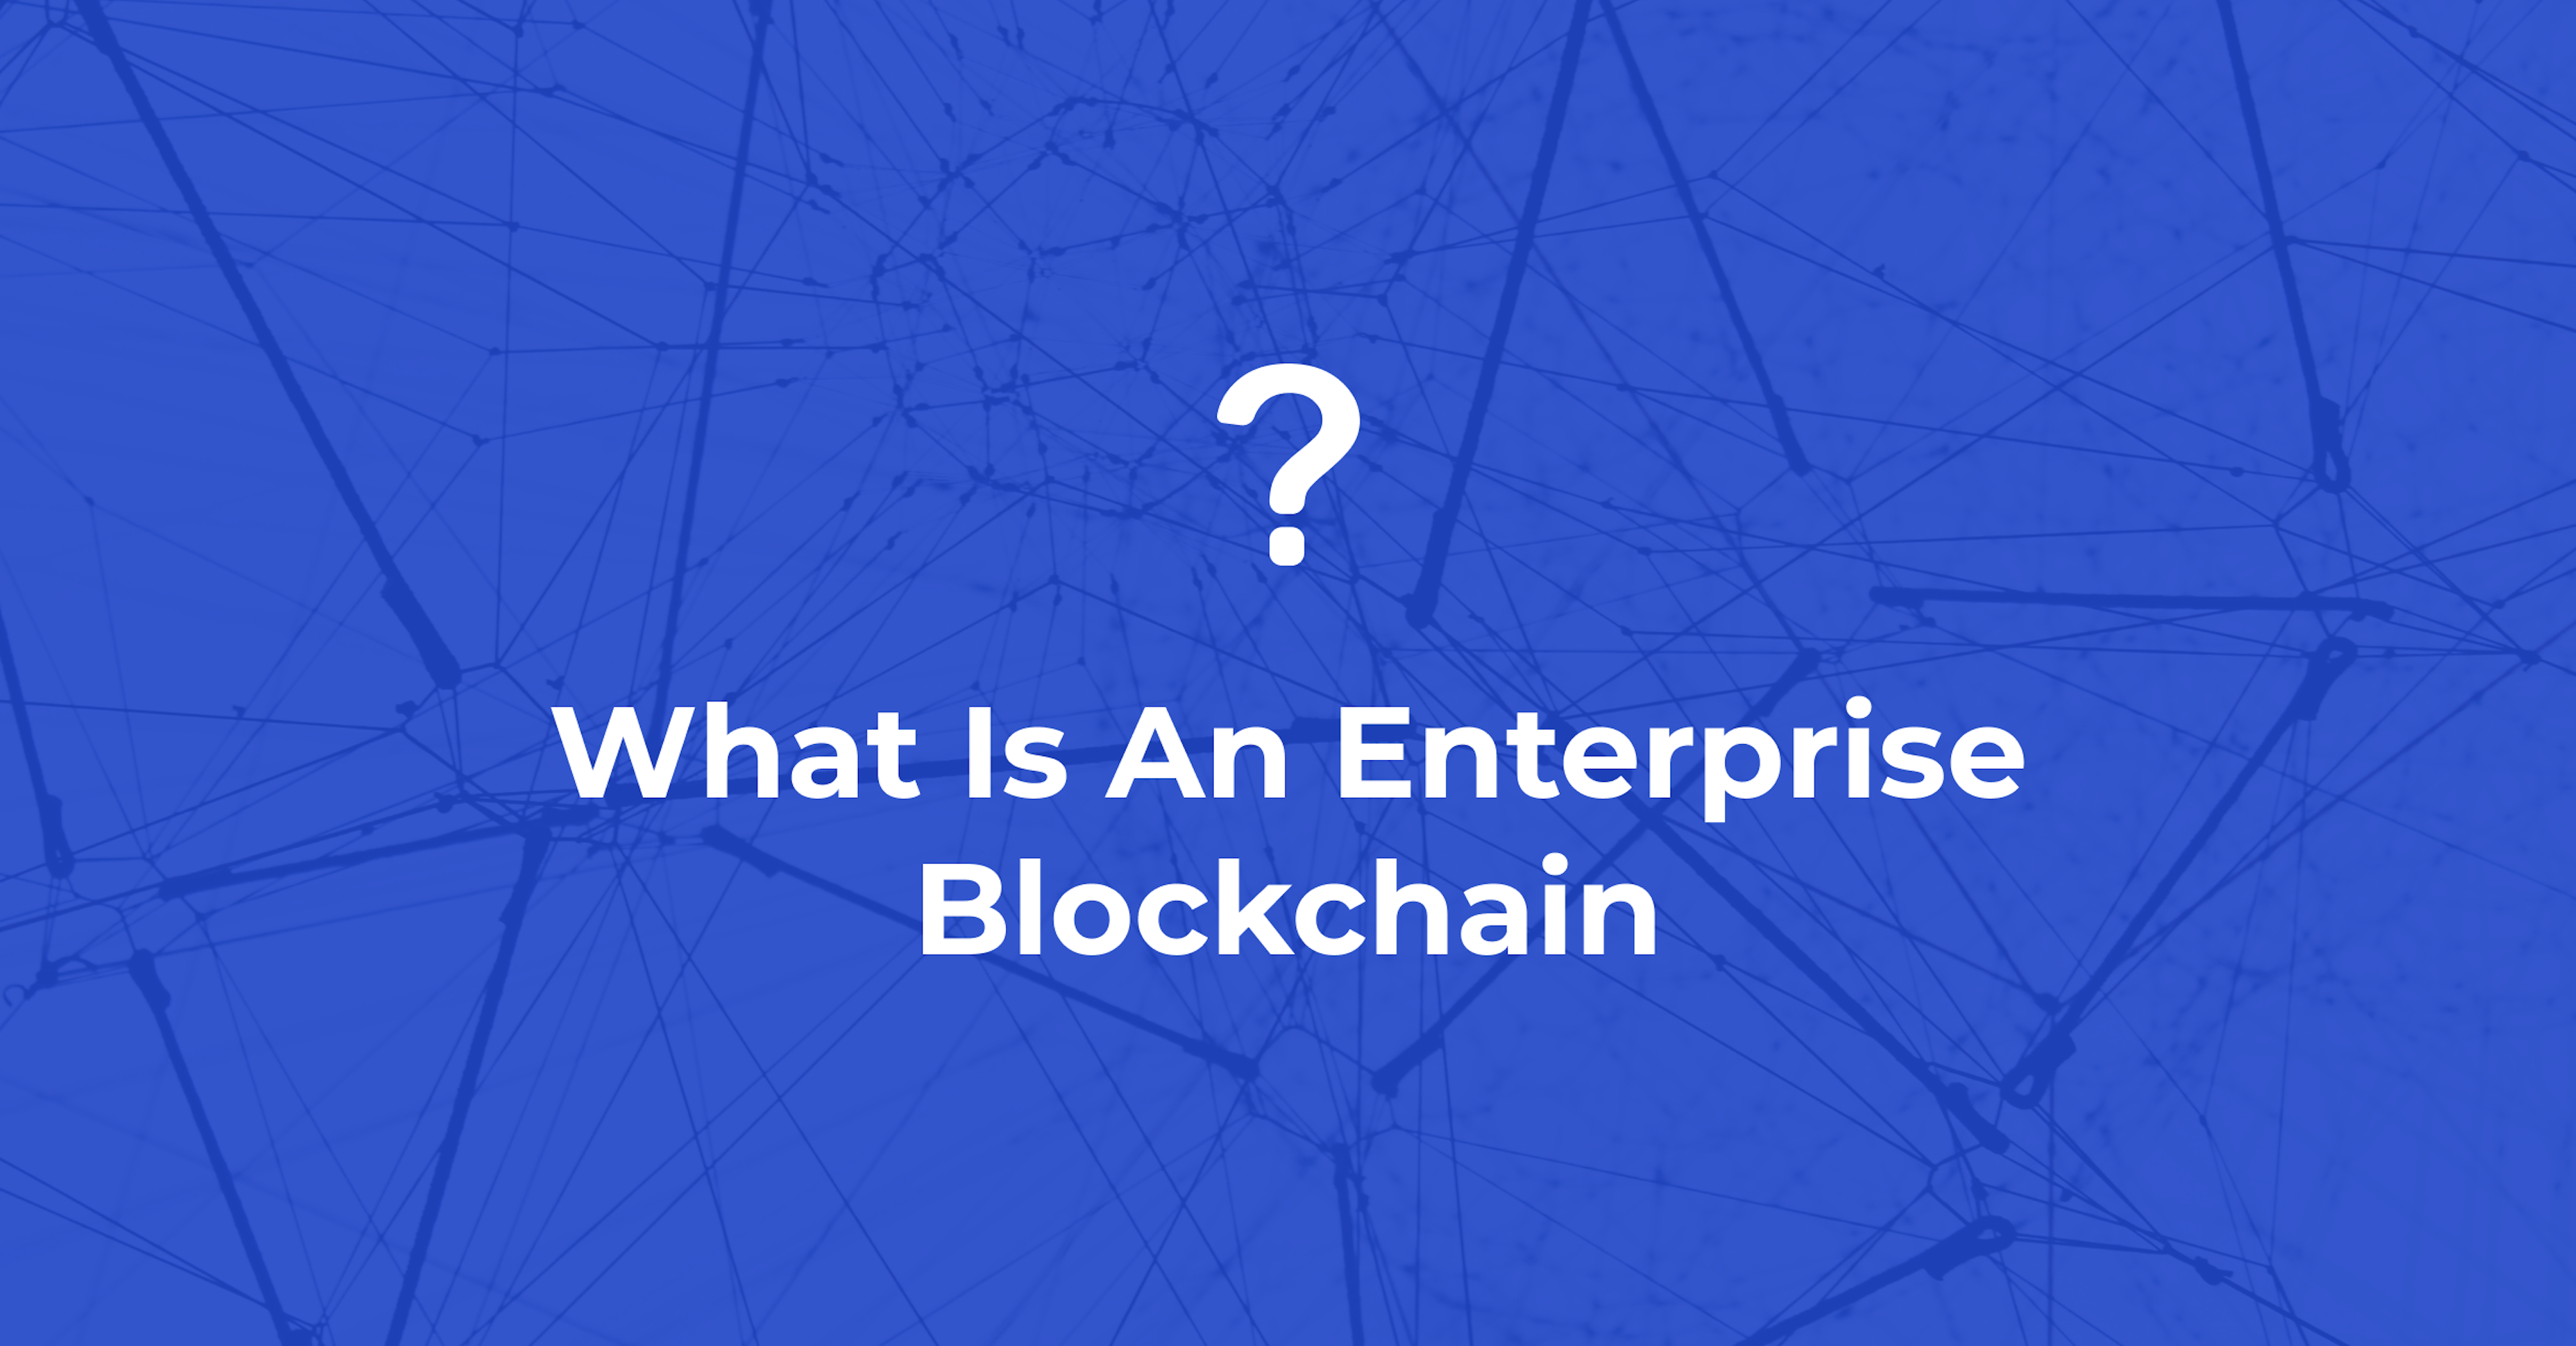 What Is An Enterprise Blockchain?